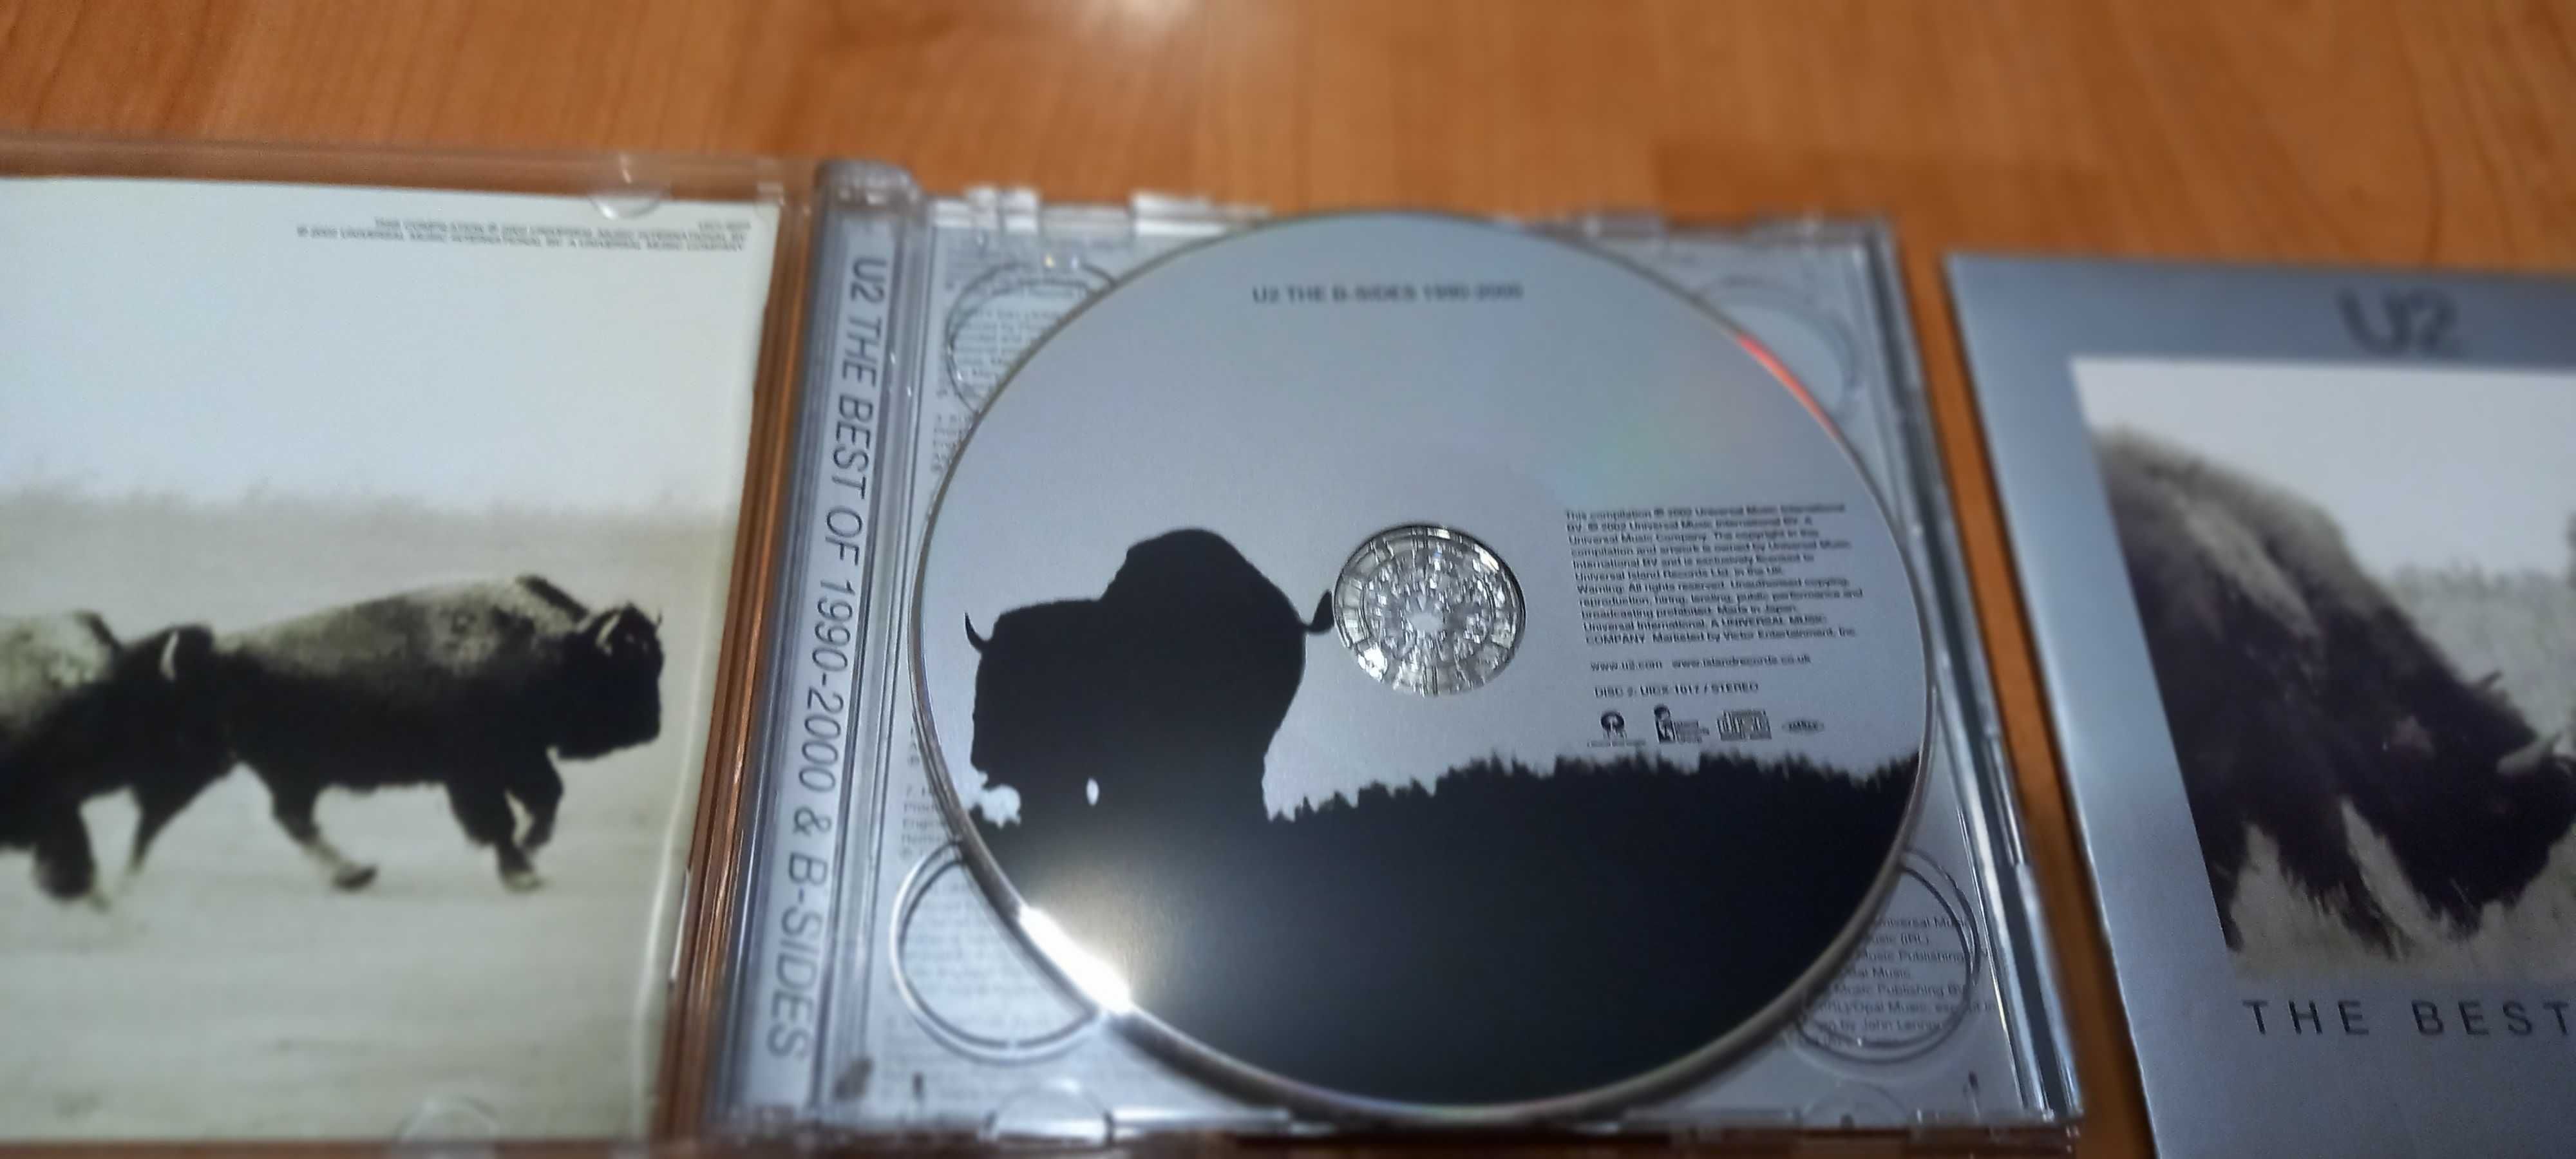 U2 Best of 90/2000 Japan
2 CD Best of e lados B + 1 DVD